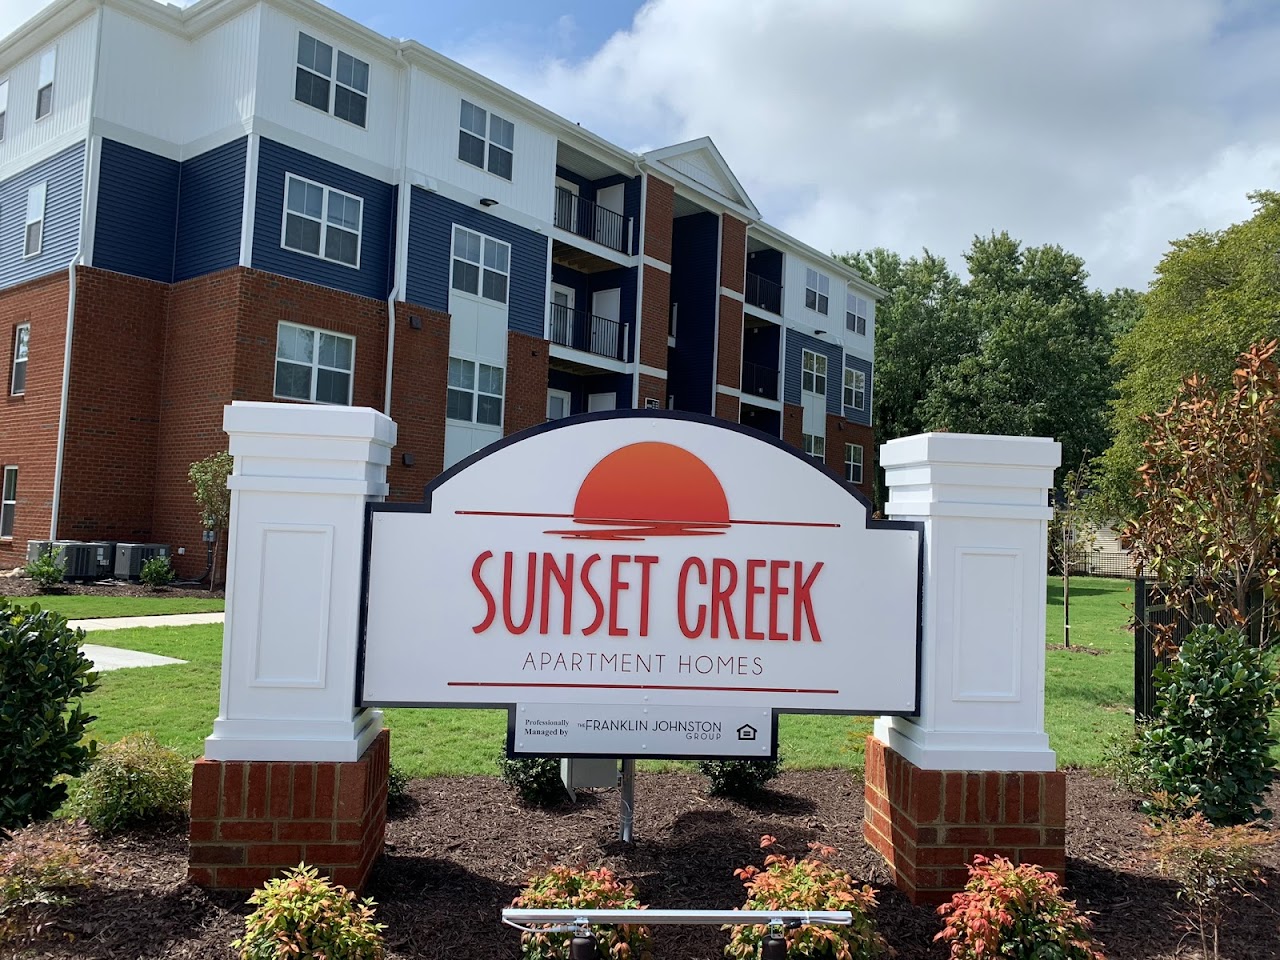 Photo of SUNSET CREEK. Affordable housing located at 4020 VICTORIA BLVD HAMPTON, VA 23669